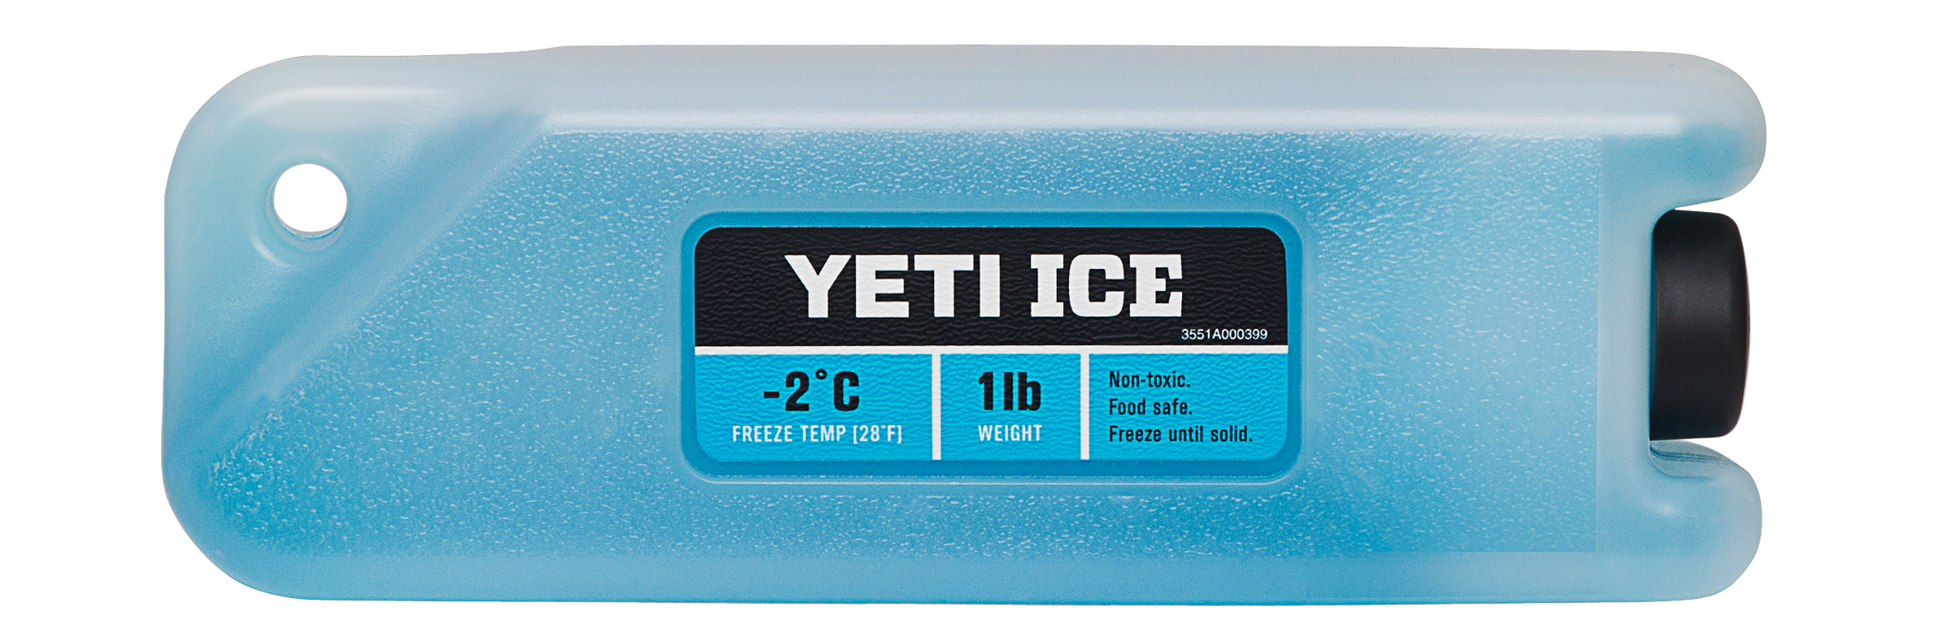 Yeti Ice 1-Pound